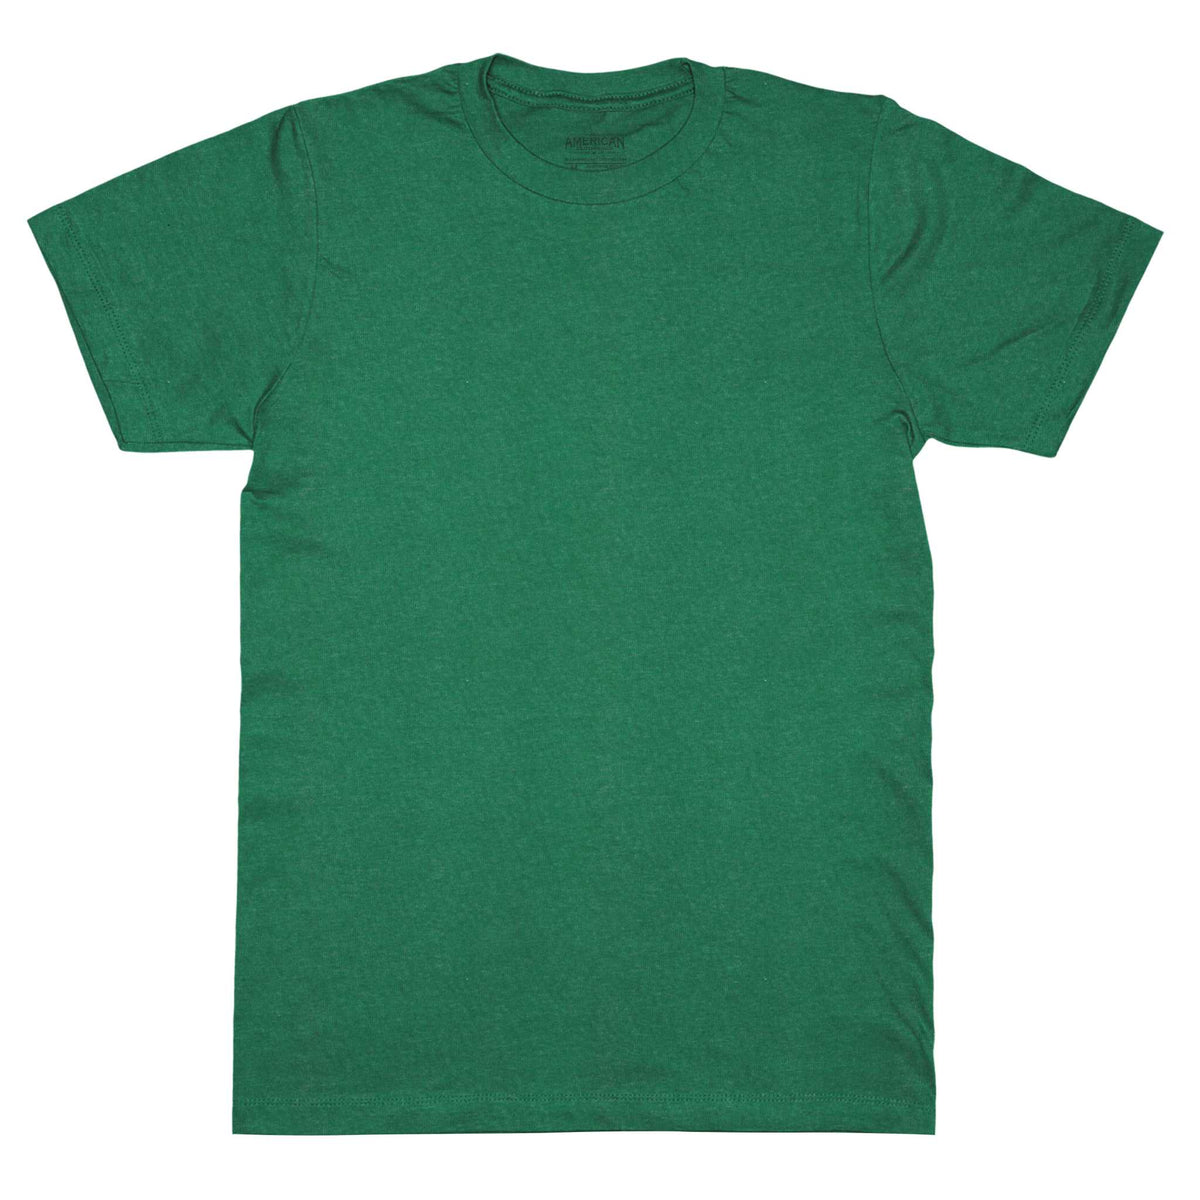 True Classic Light Heather Gray Crew Neck Long Sleeve T-Shirt | Cotton Blend | Athletic Cut | 3XL